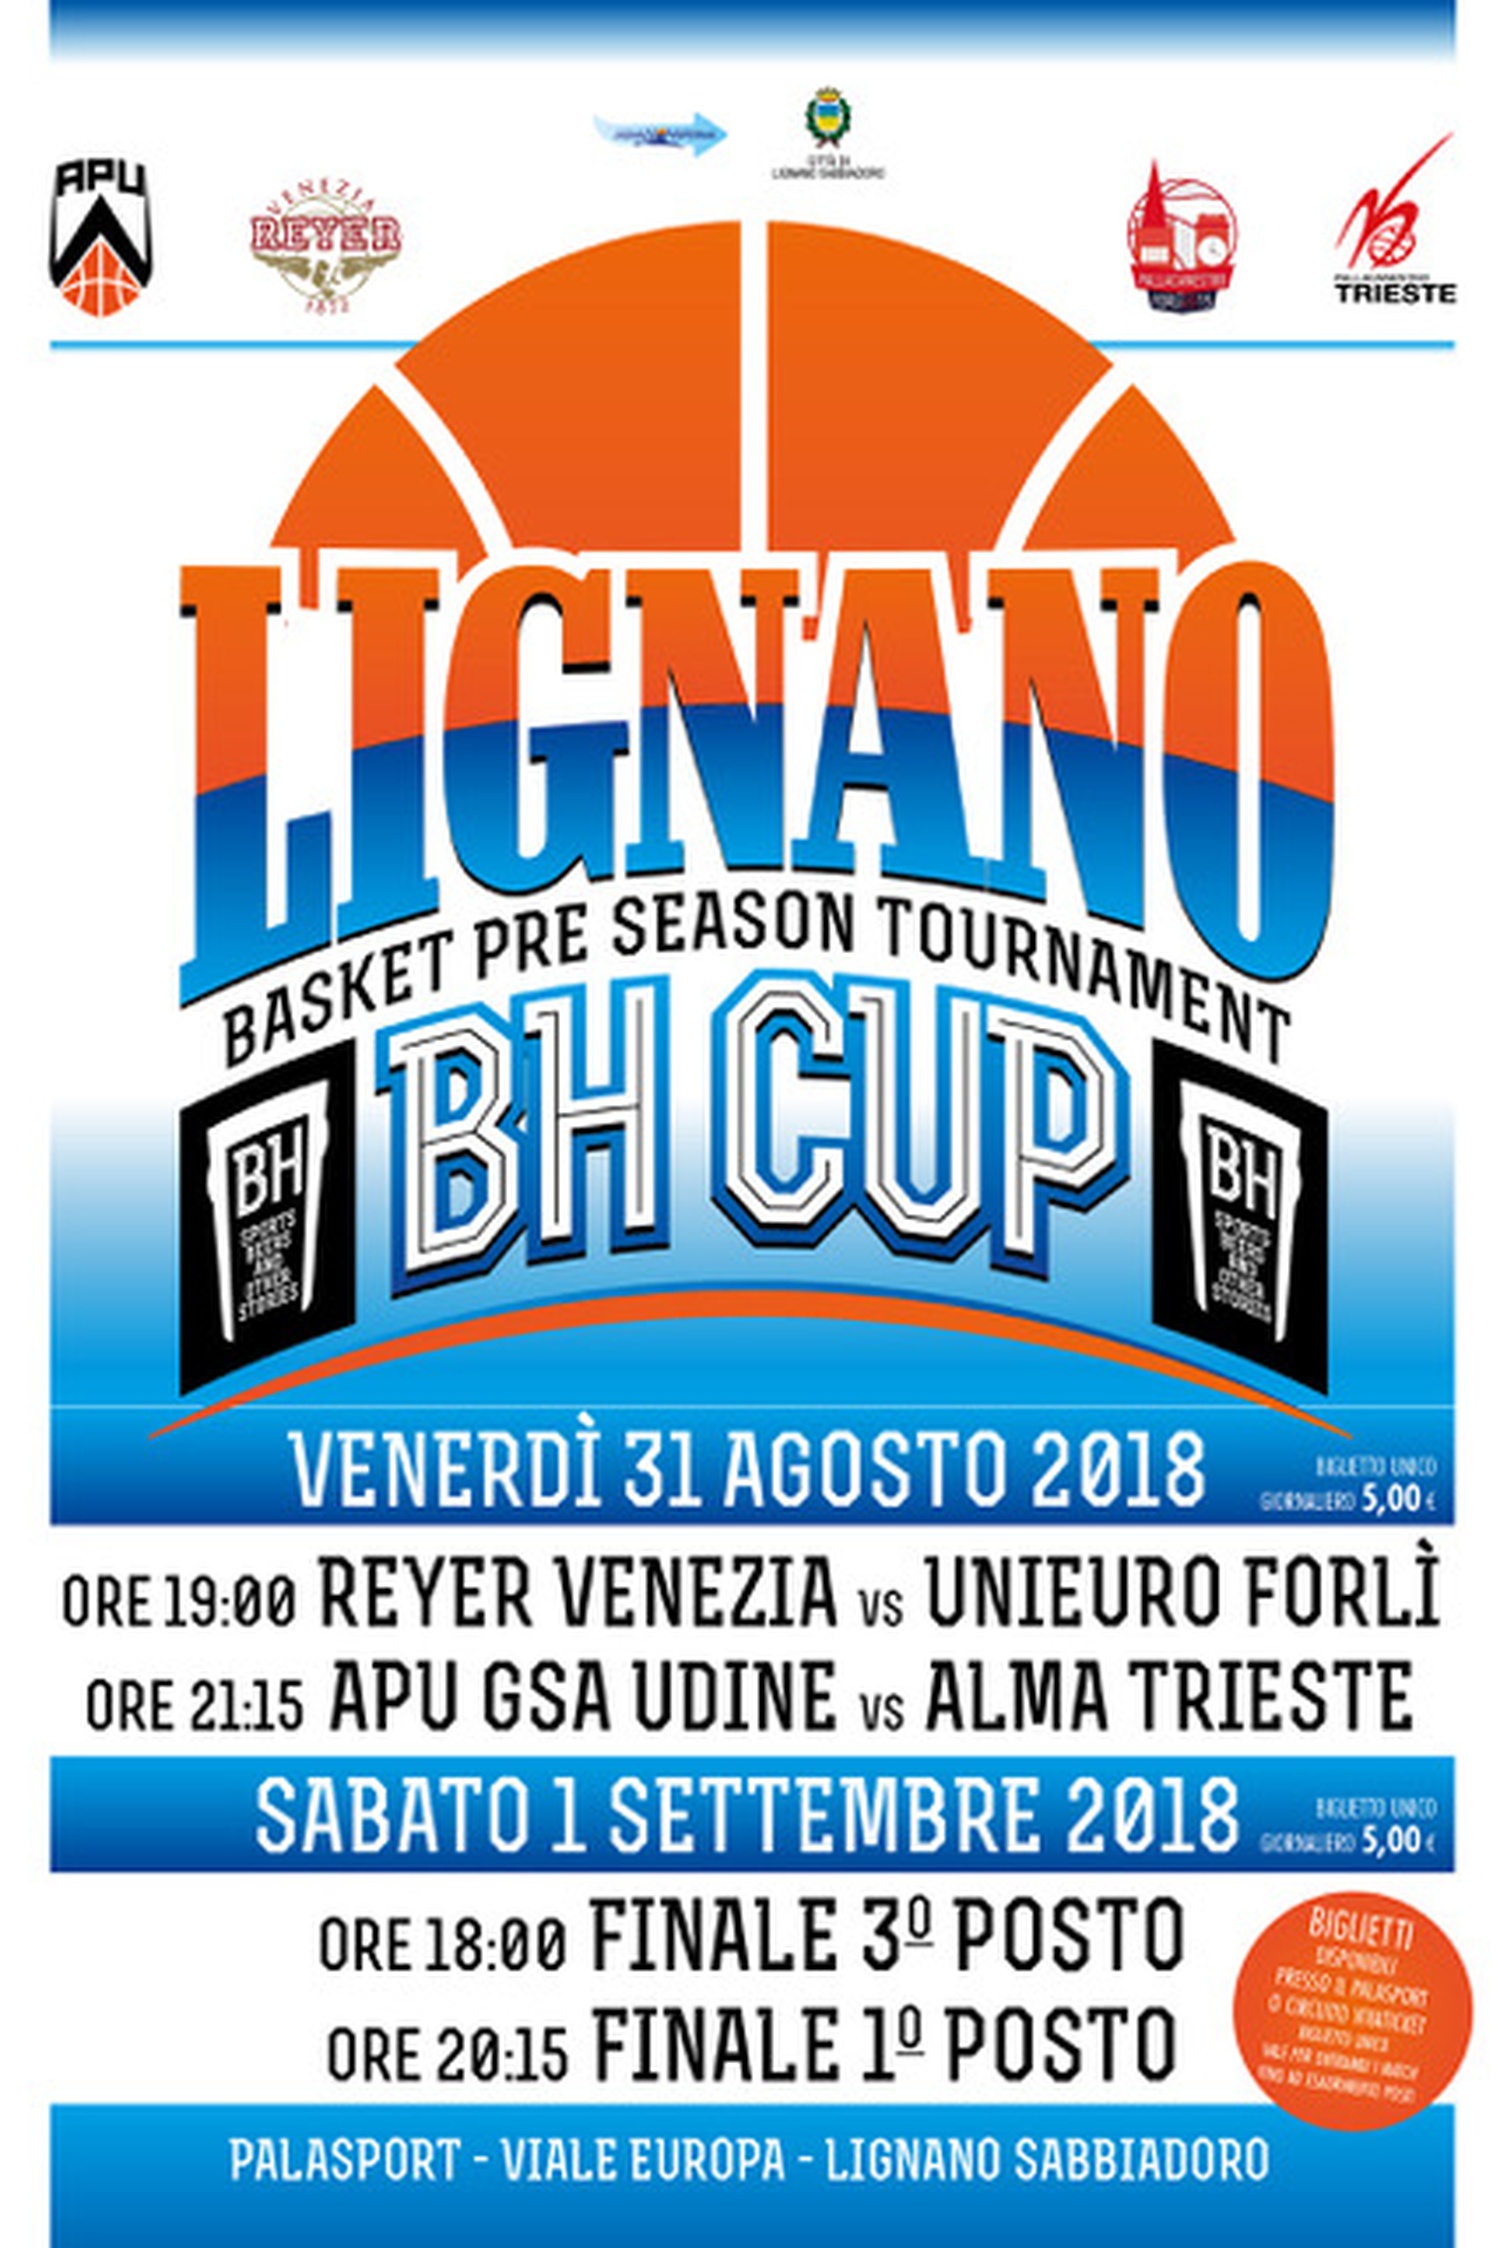 Picture ofLignano BH Cup - Basket pre-season tournament 